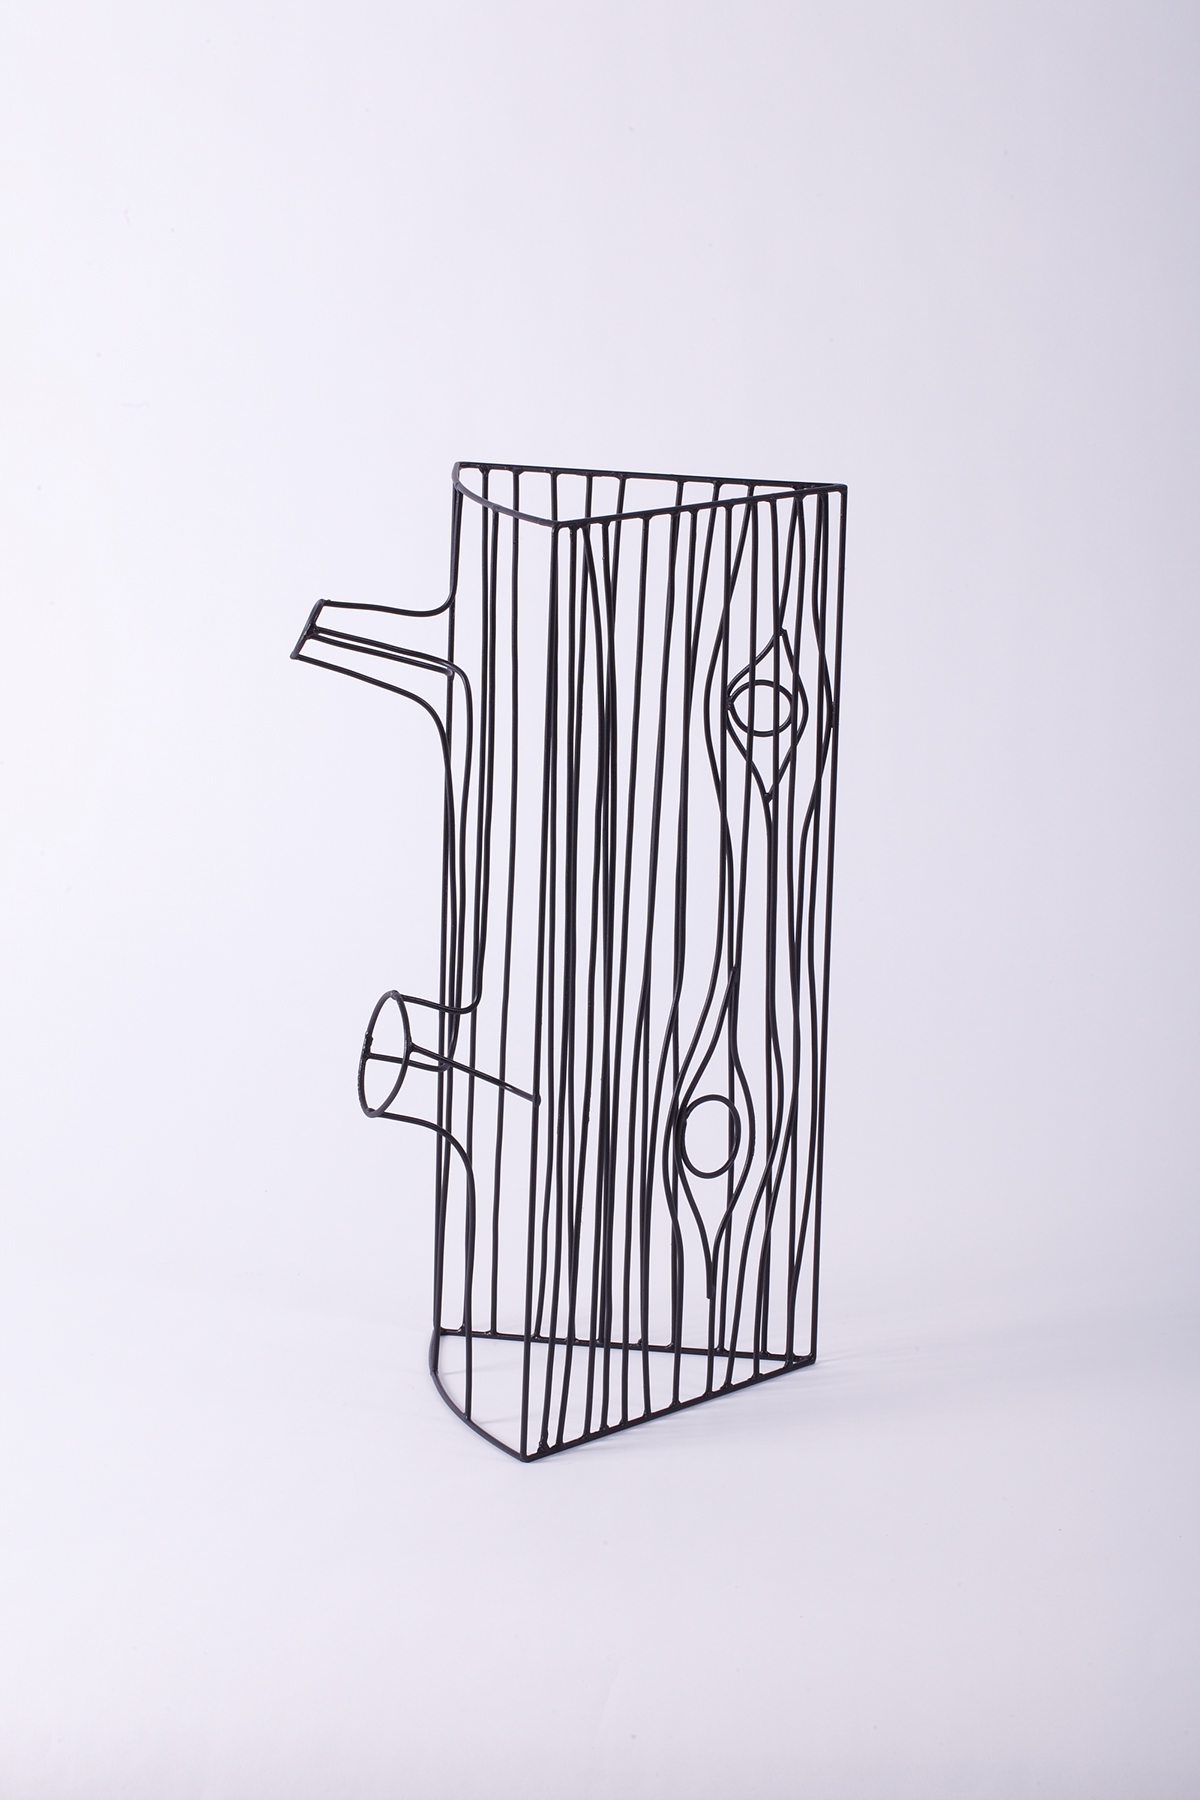 artdesign object line welded wire wooden structure